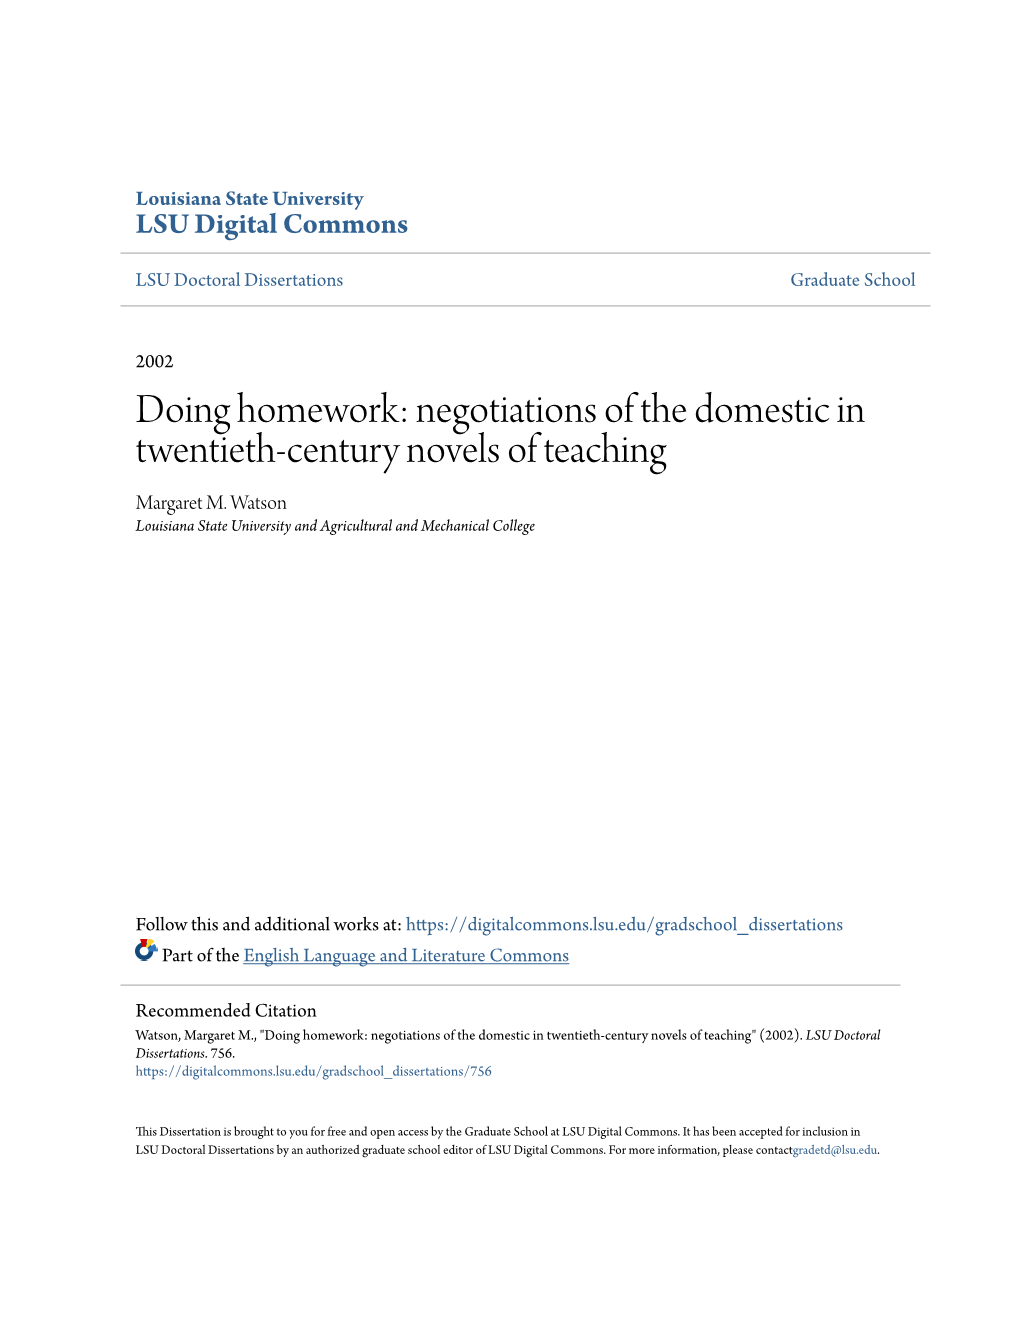 Doing Homework: Negotiations of the Domestic in Twentieth-Century Novels of Teaching Margaret M